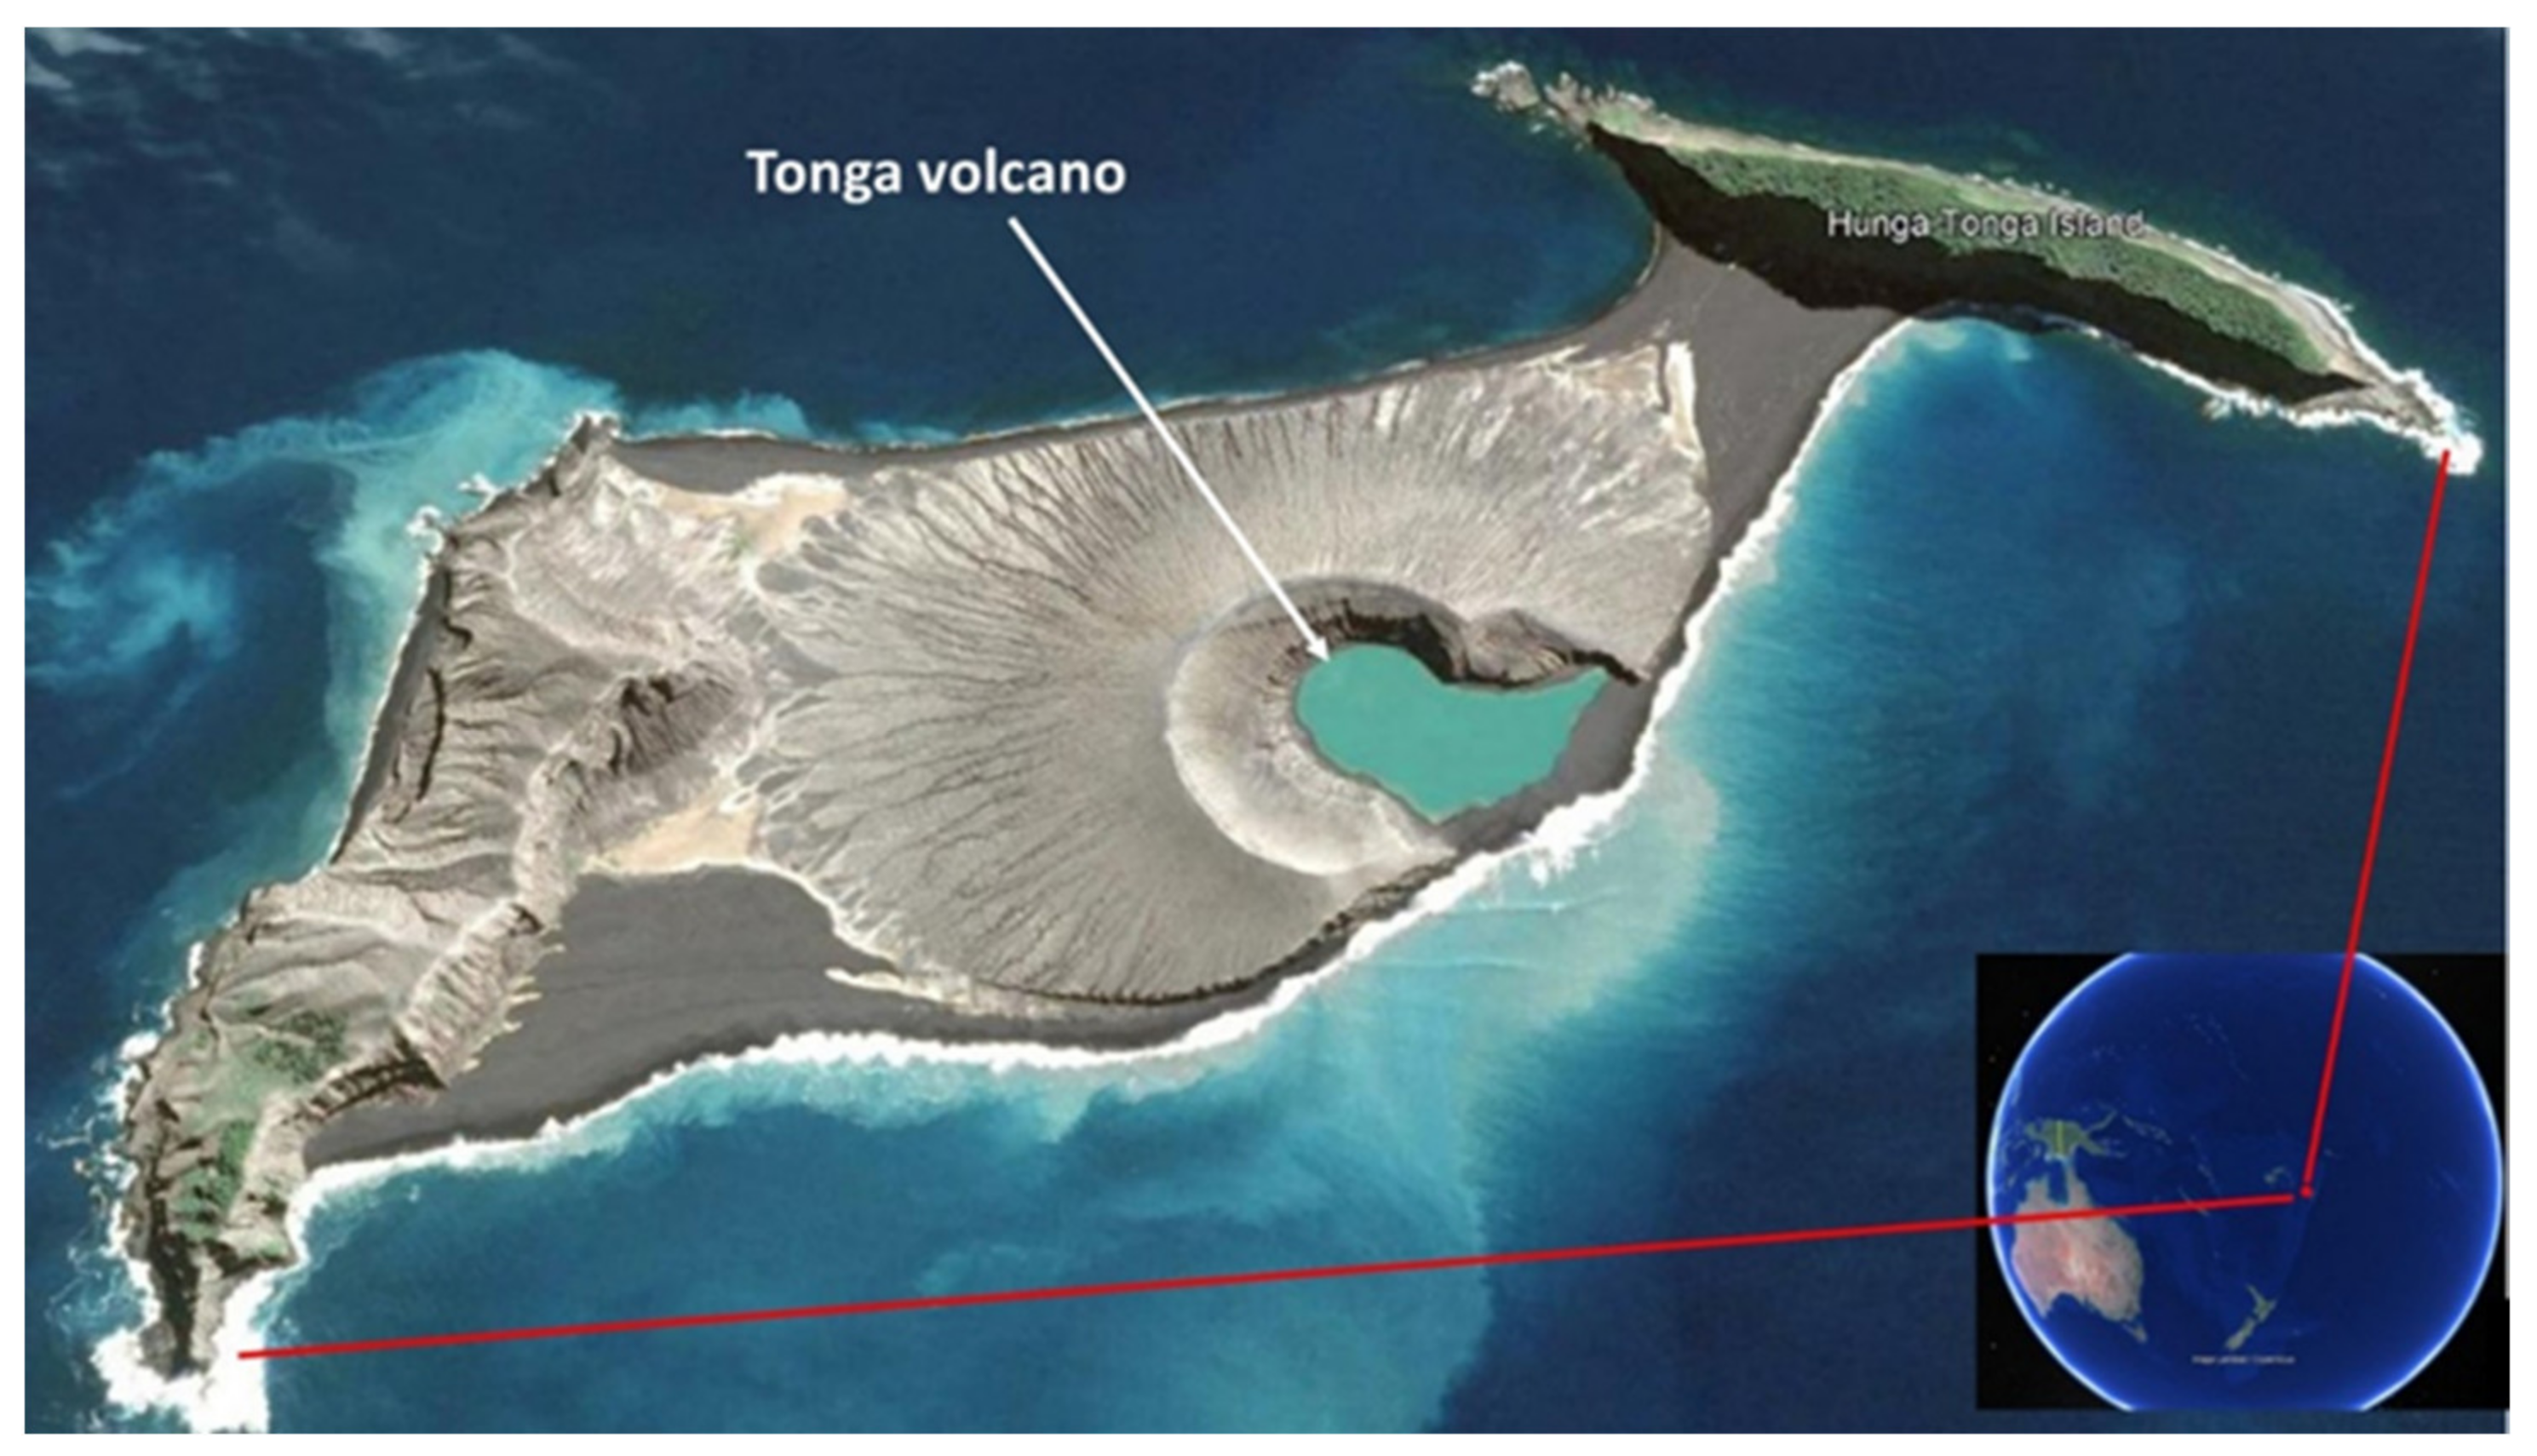 Global Volcanism Program  Bulletin of the Global Volcanism Network